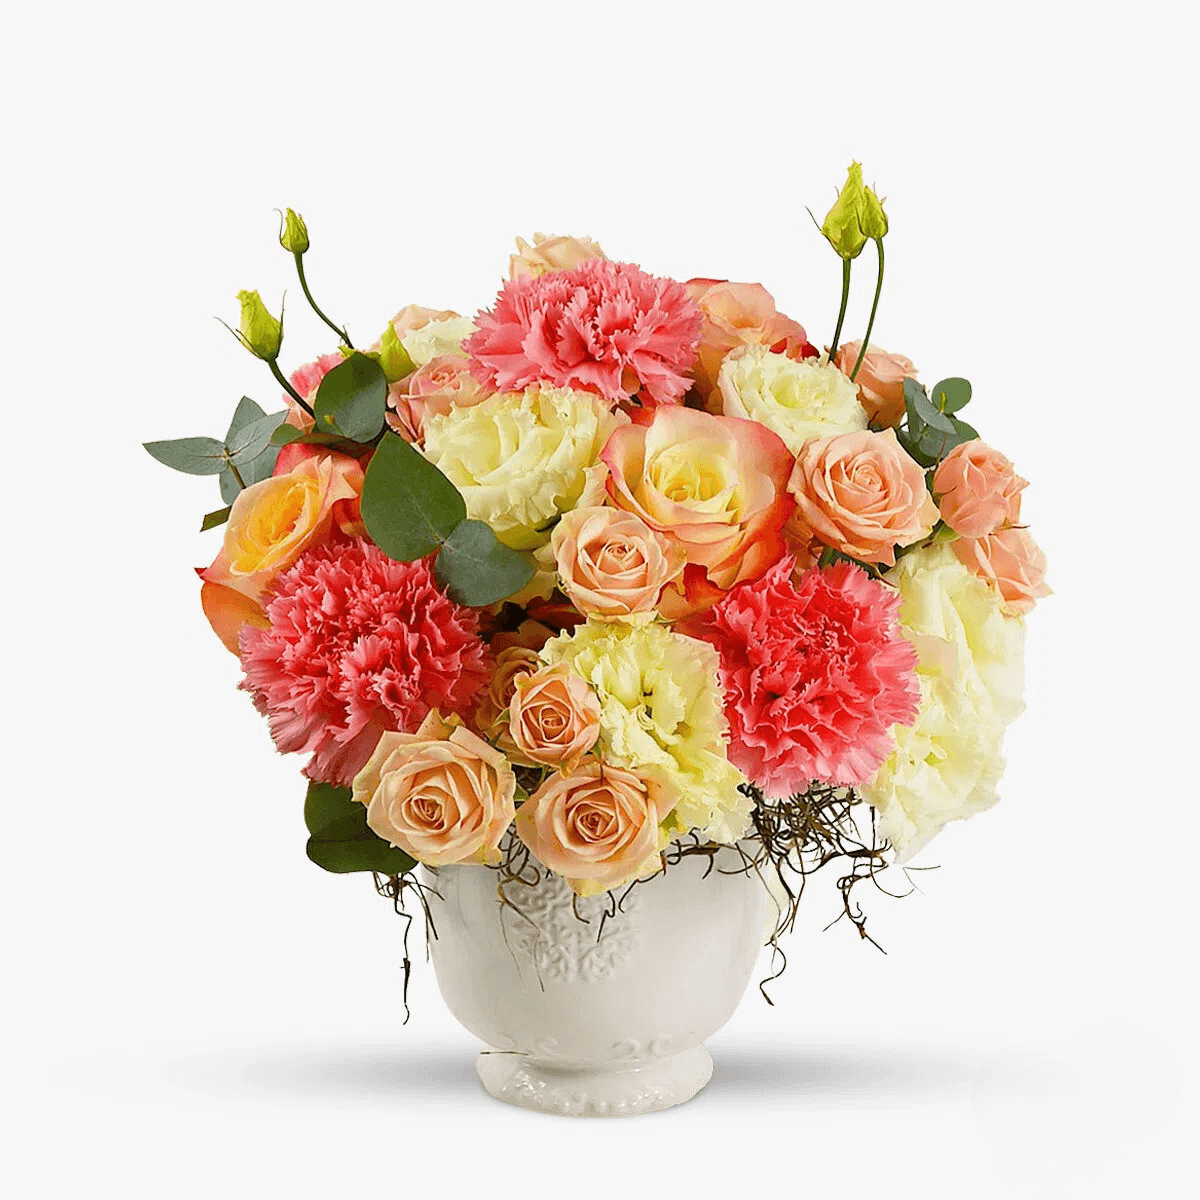 Aranjament floral – Alee de toamna – Standard Alee